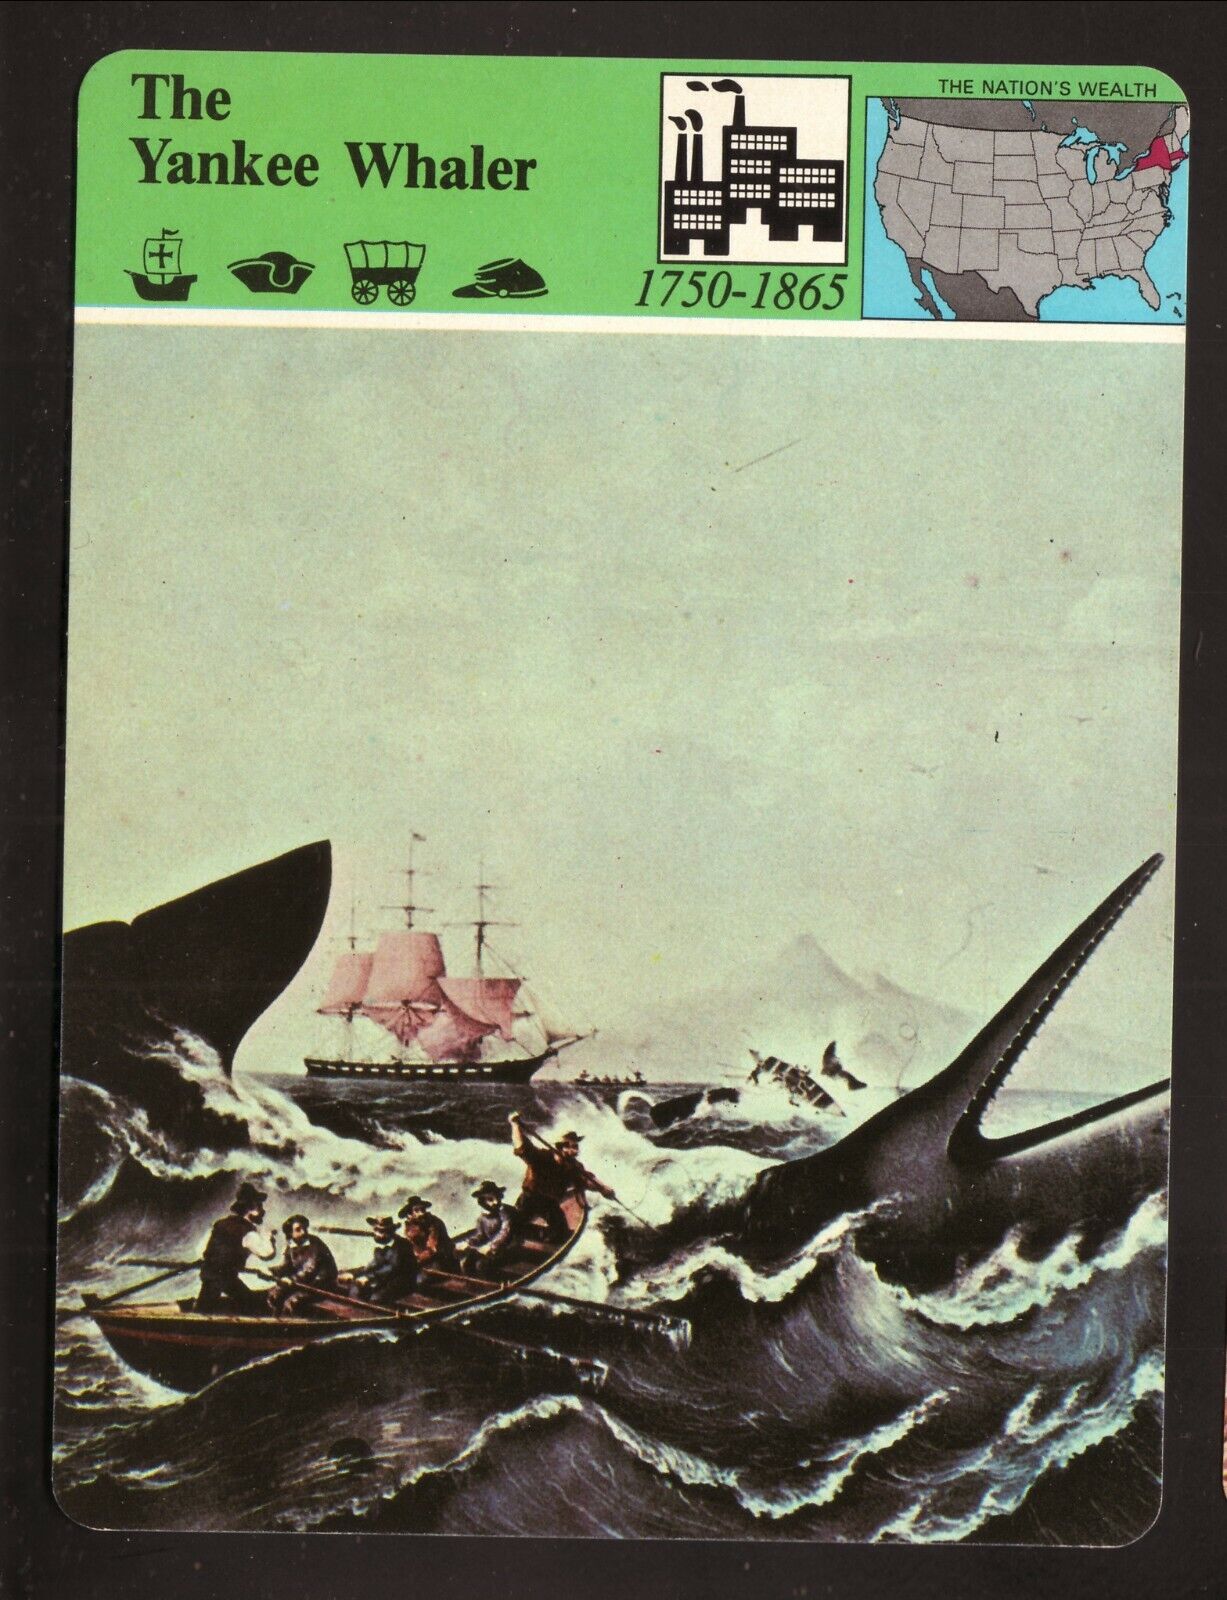 The Yankee Whaler--Story Of America--1979 Panarizon Card